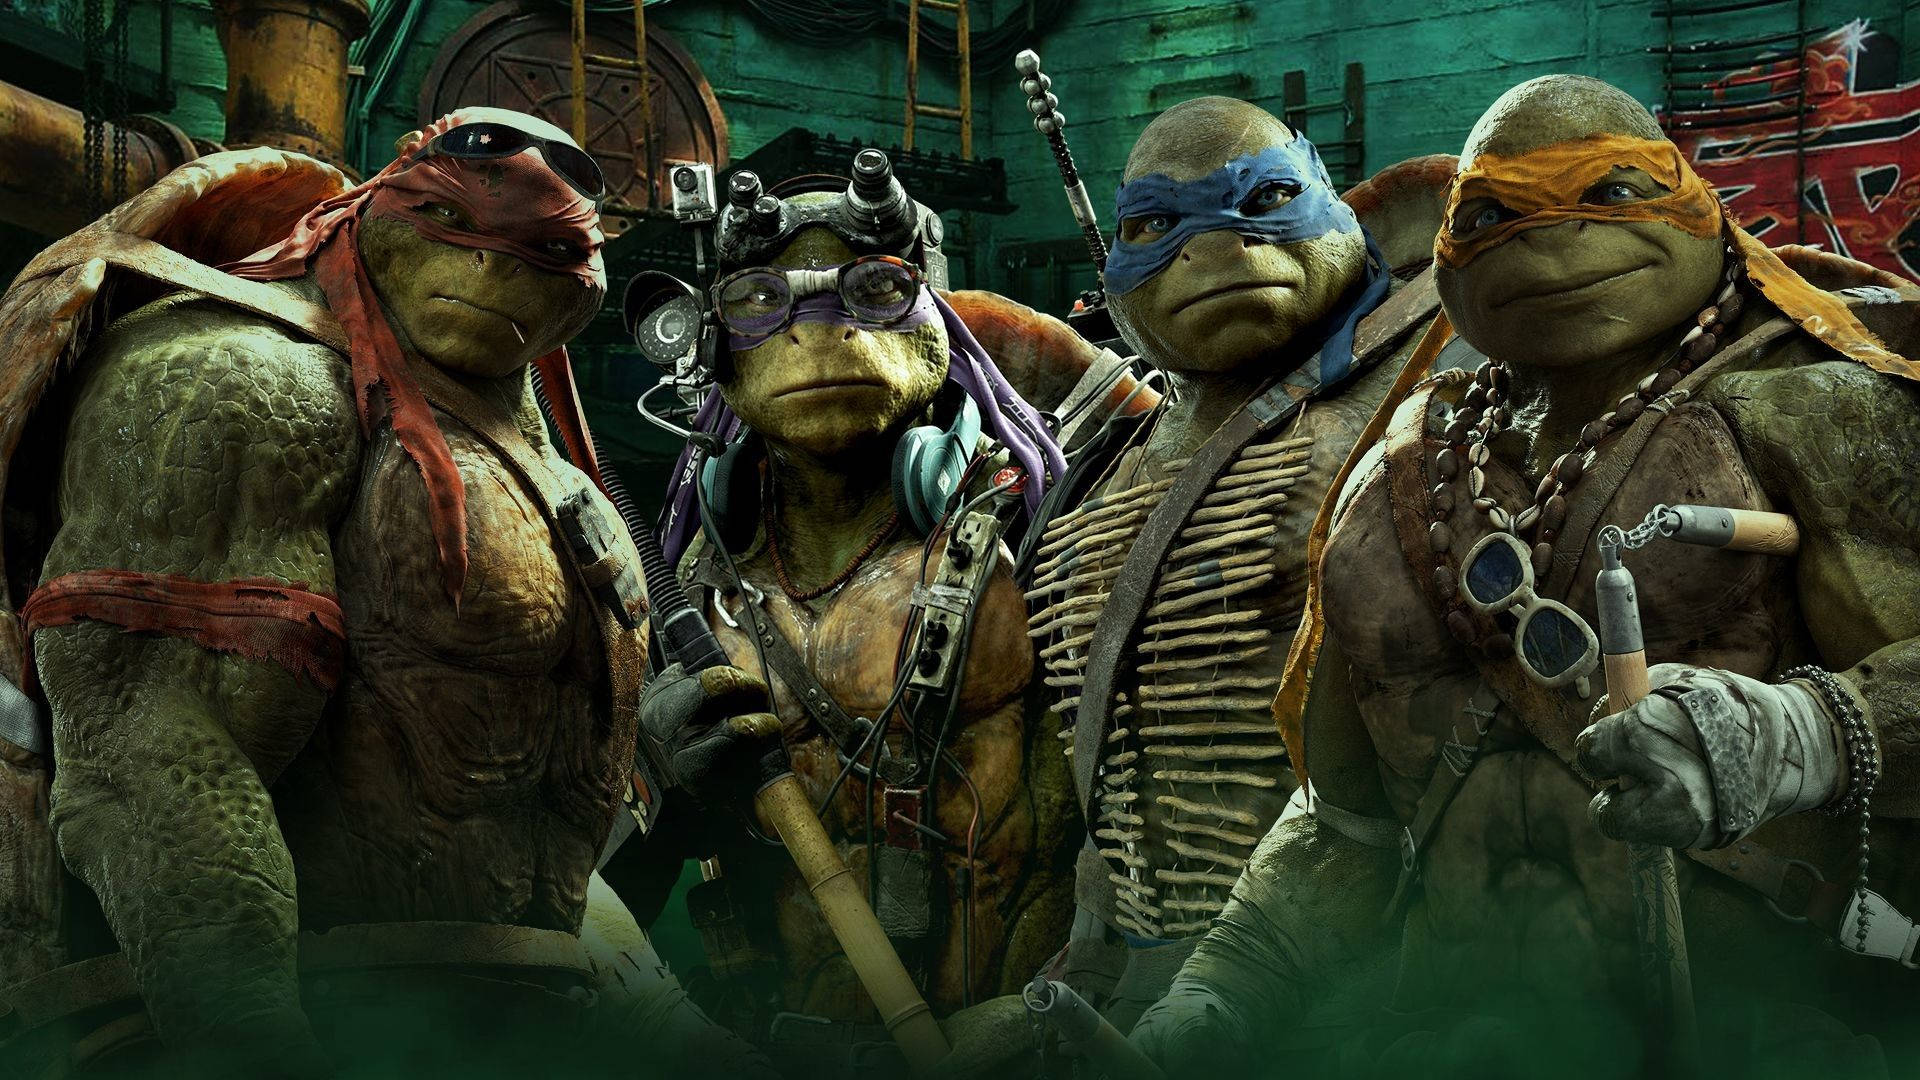 https://wallpapers.com/images/hd/teenage-mutant-ninja-turtles-movie-versions-uul75w1vtnrcdpfk.jpg